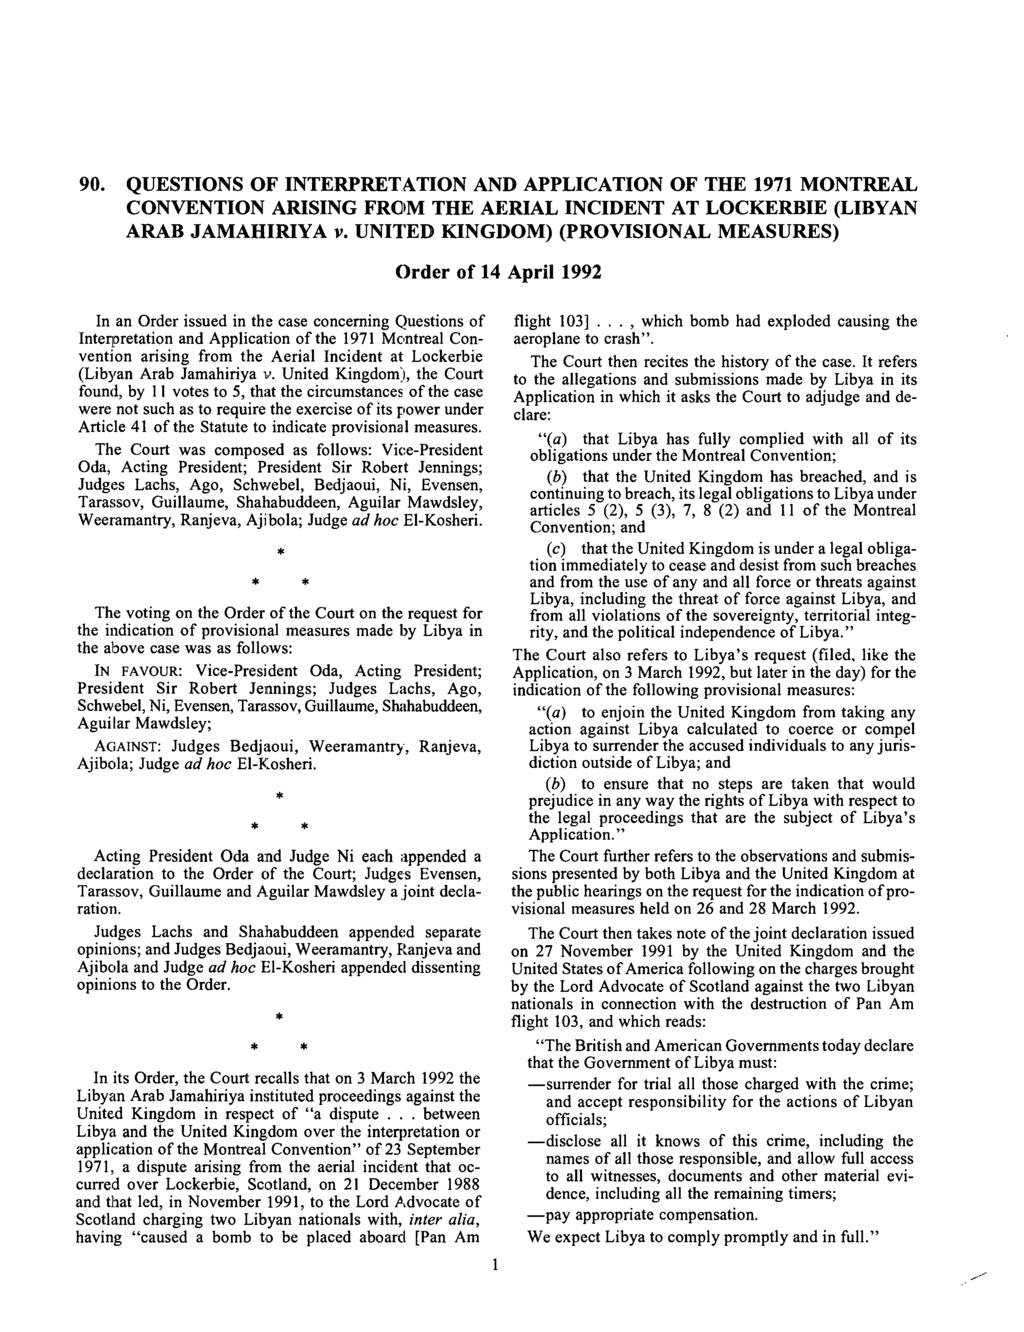 90. QUESTIONS OF INTERPRETATION AND APPLICATION OF THE 1971 MONTREAL CONVENTION ARISING FROM THE AERIAL INCIDENT AT LOCKERBIE (LIBYAN ARAB JAMAHIRIYA v.